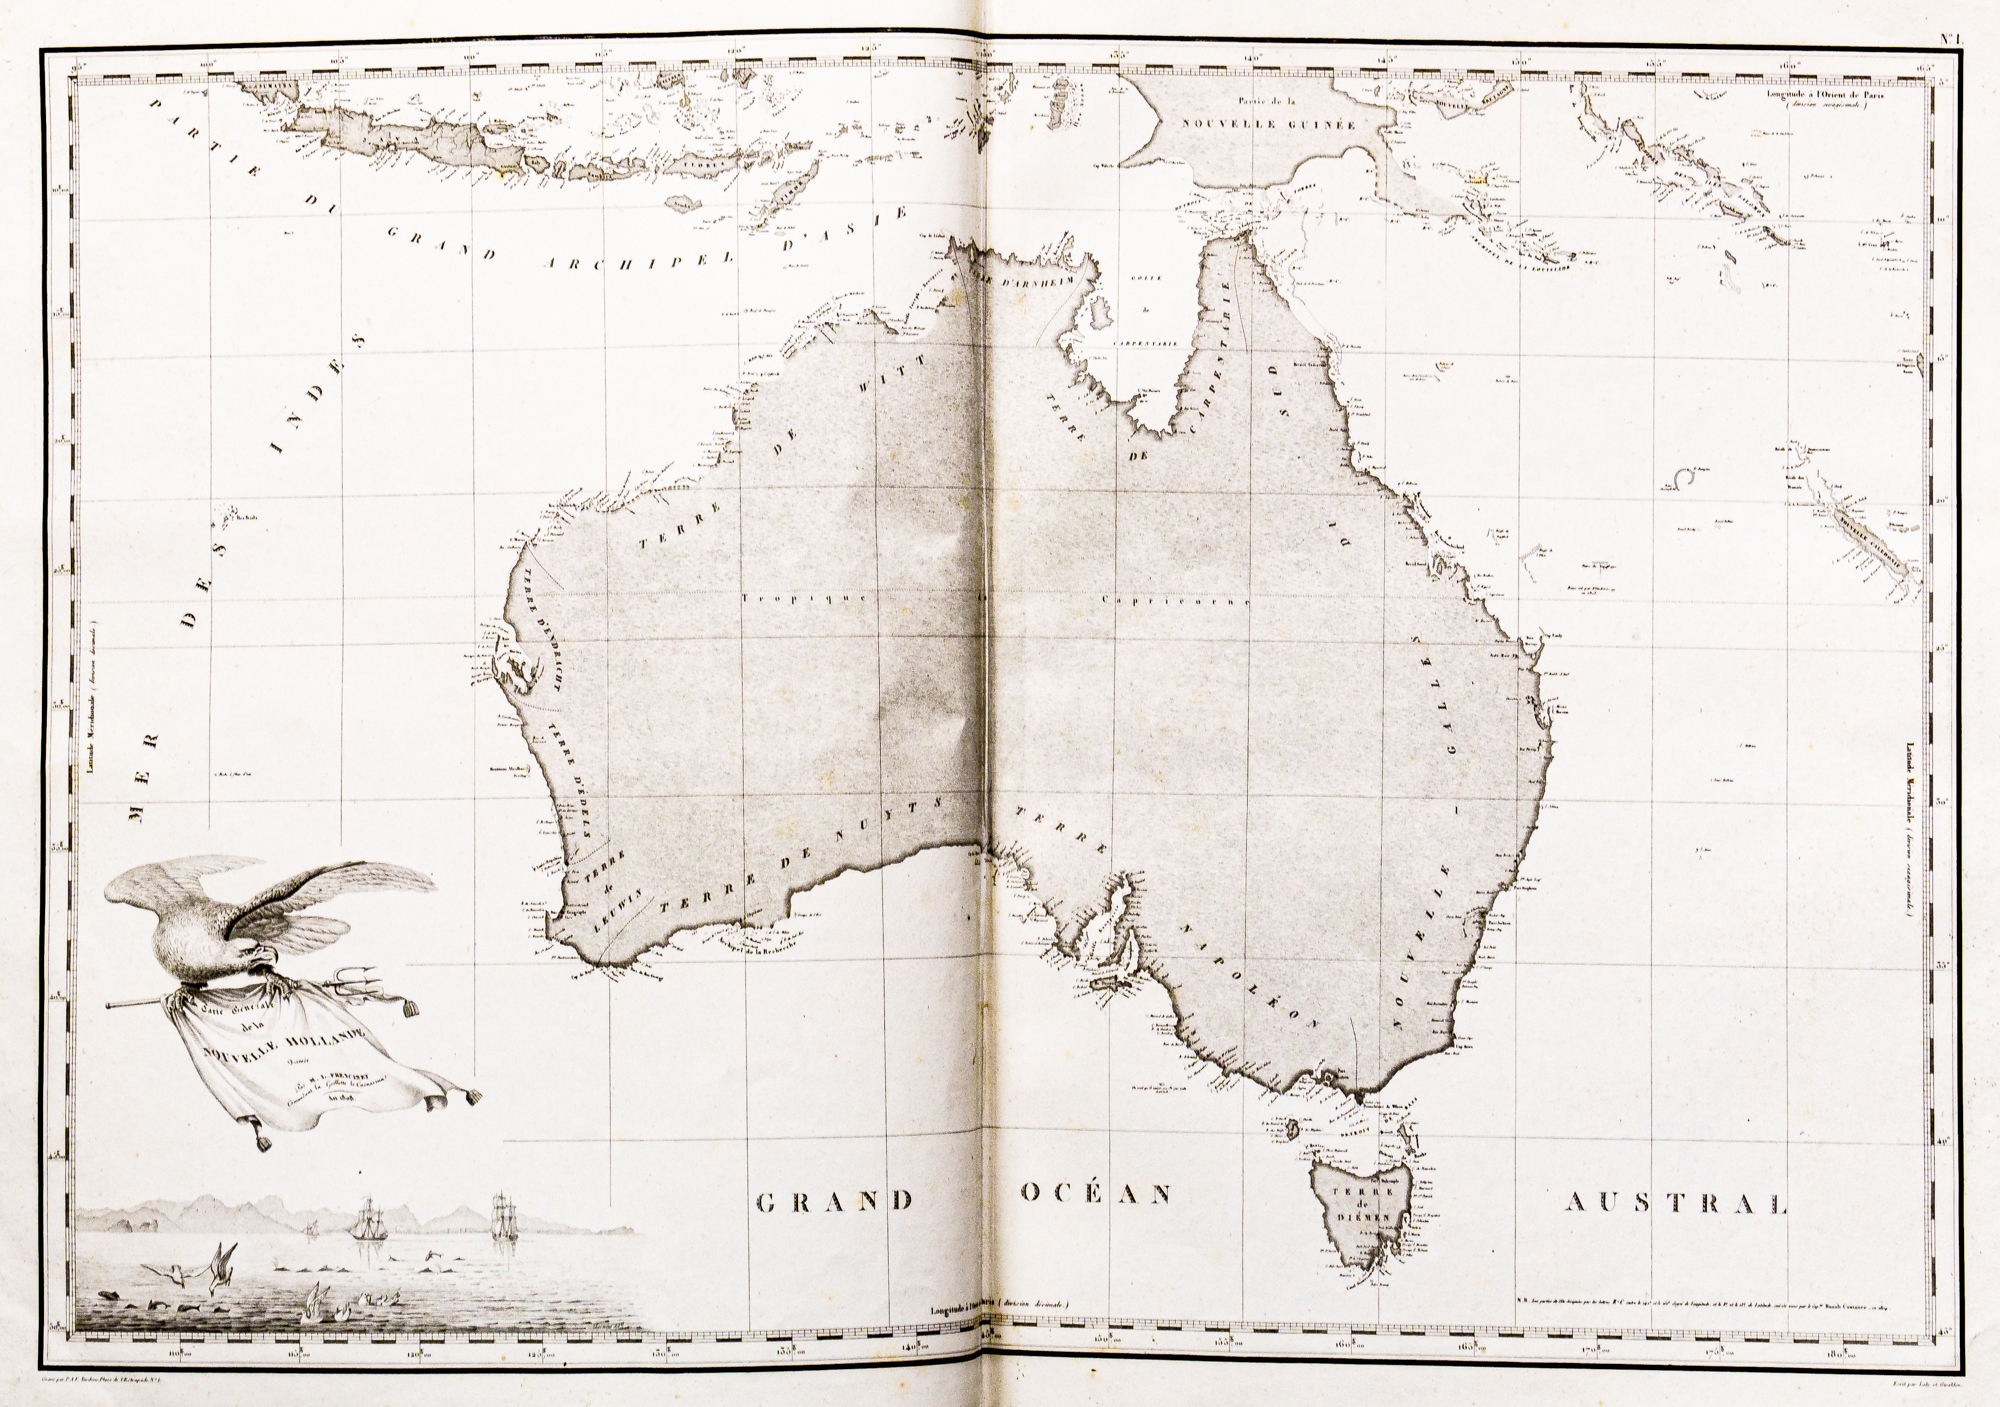 Freycinet's map of Australia